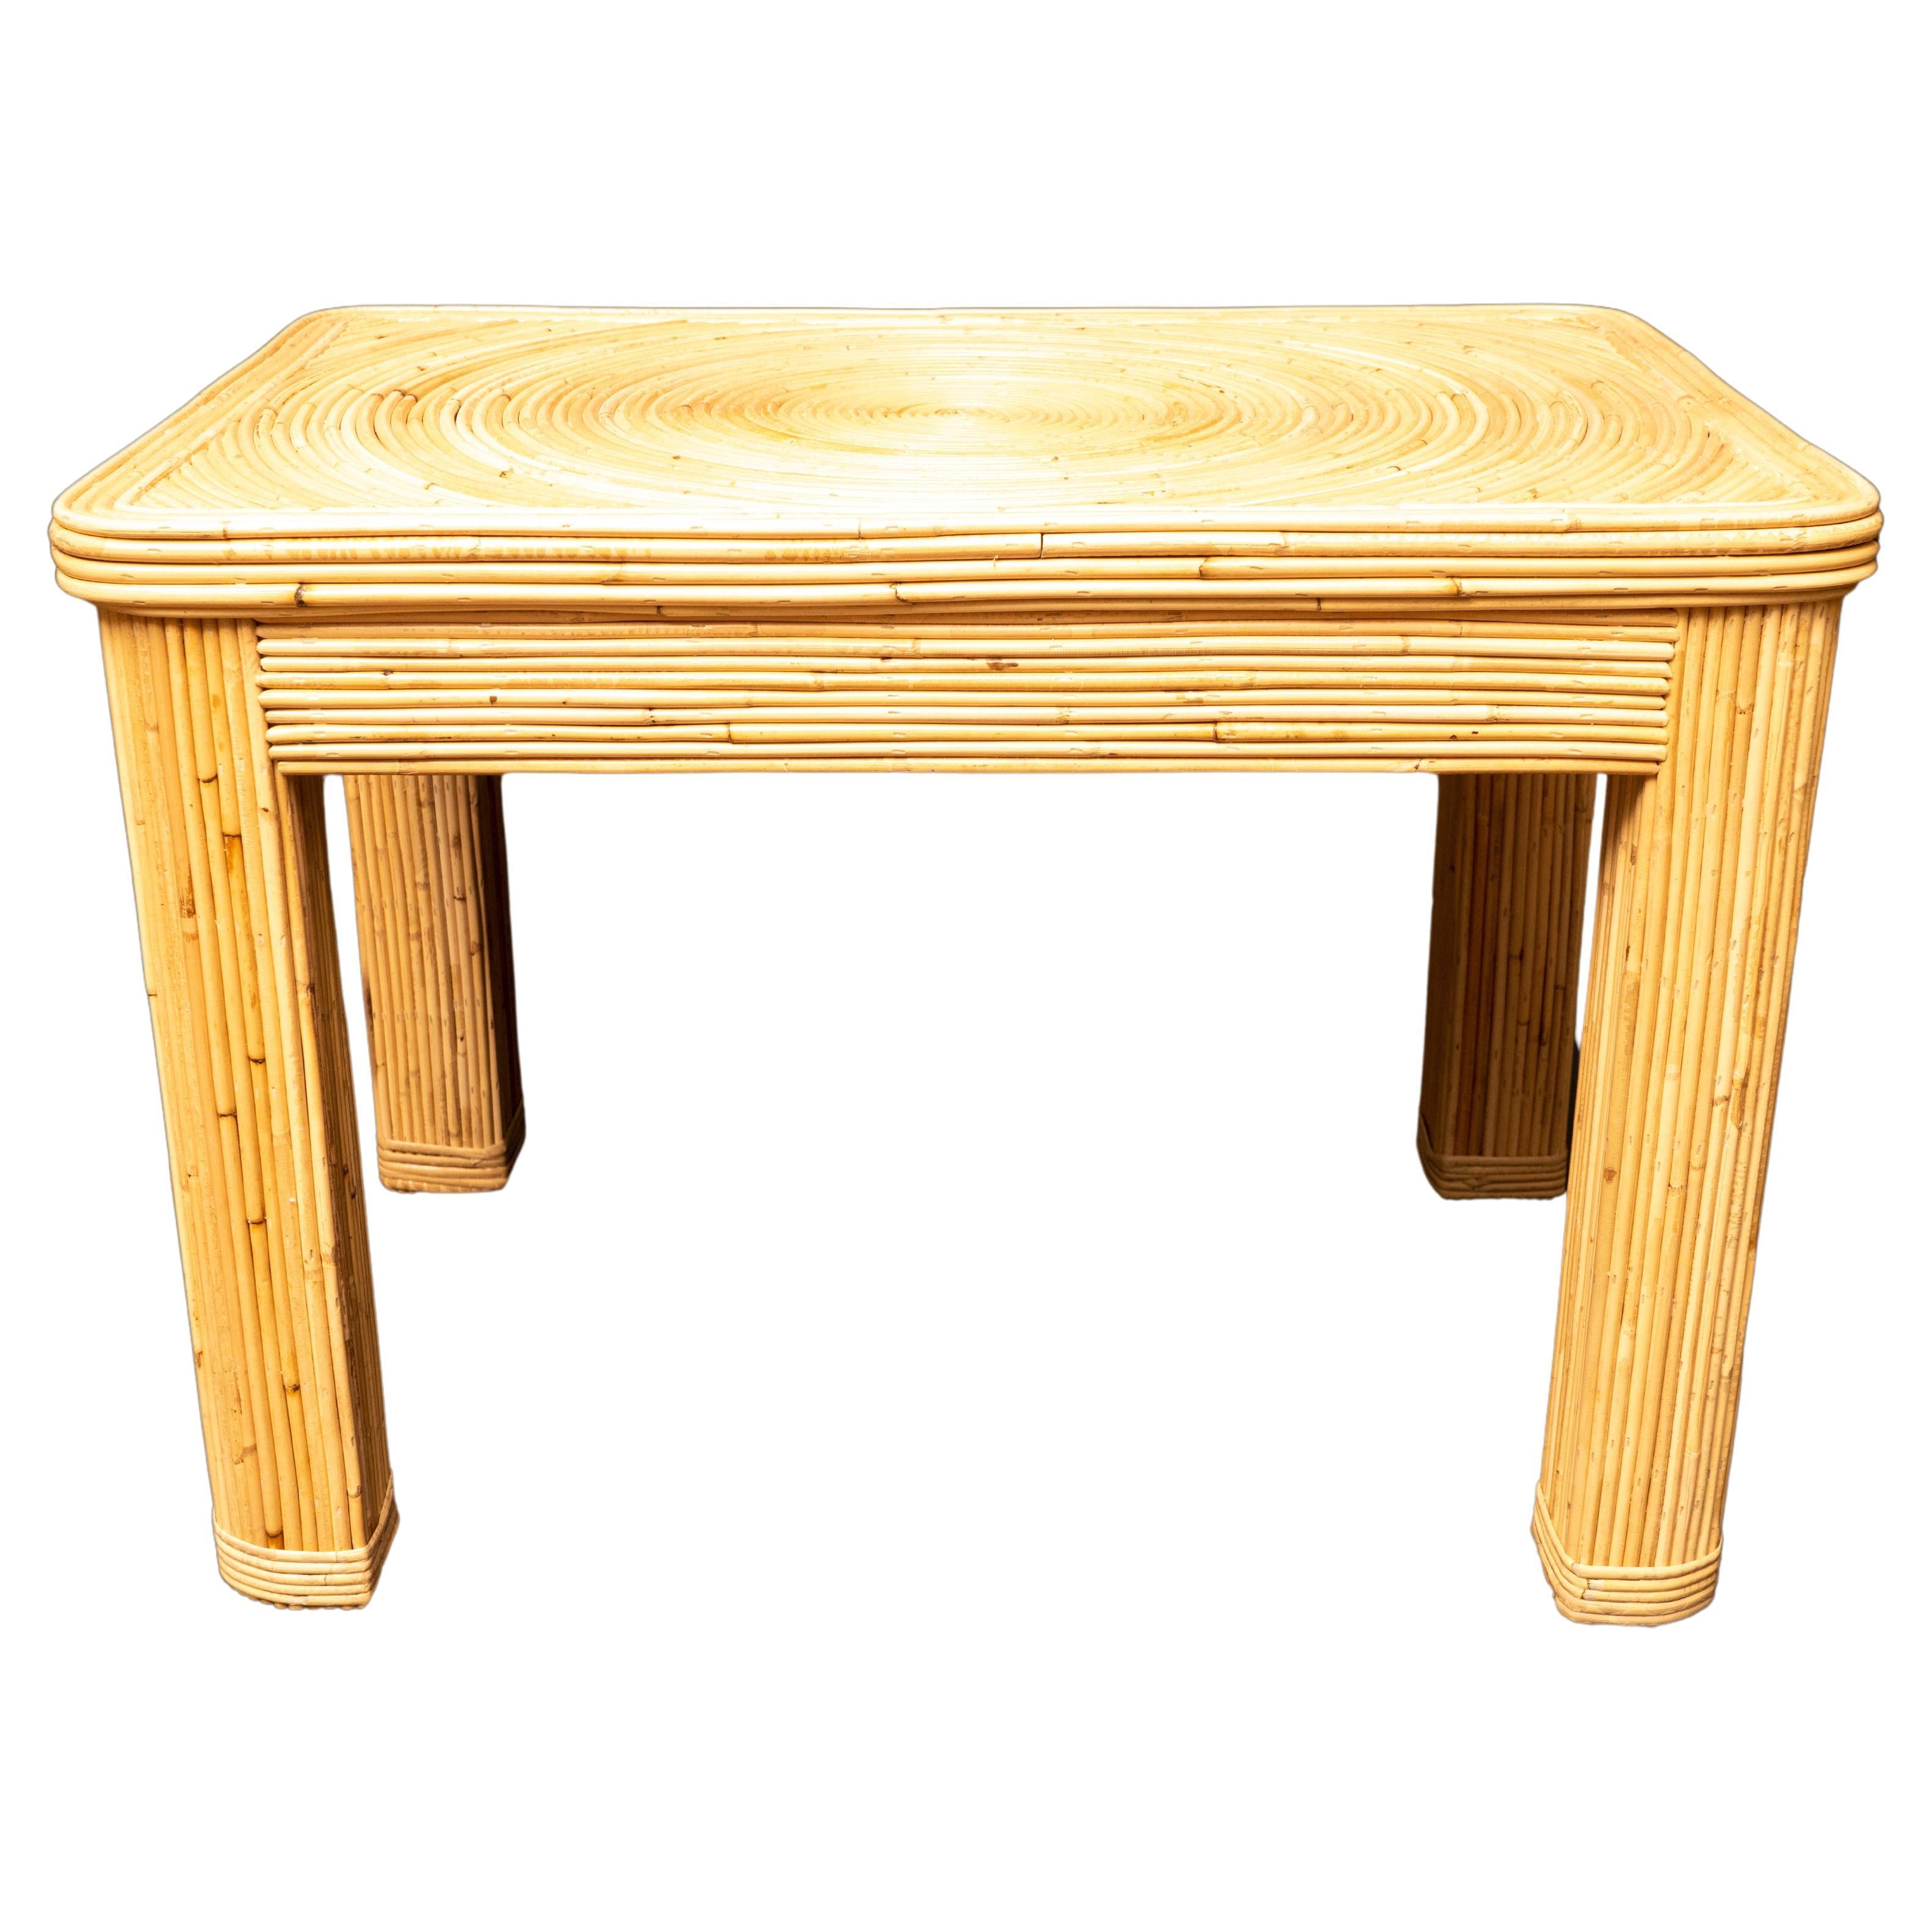 Table d'appoint rectangulaire en rotin par Creel and Gow